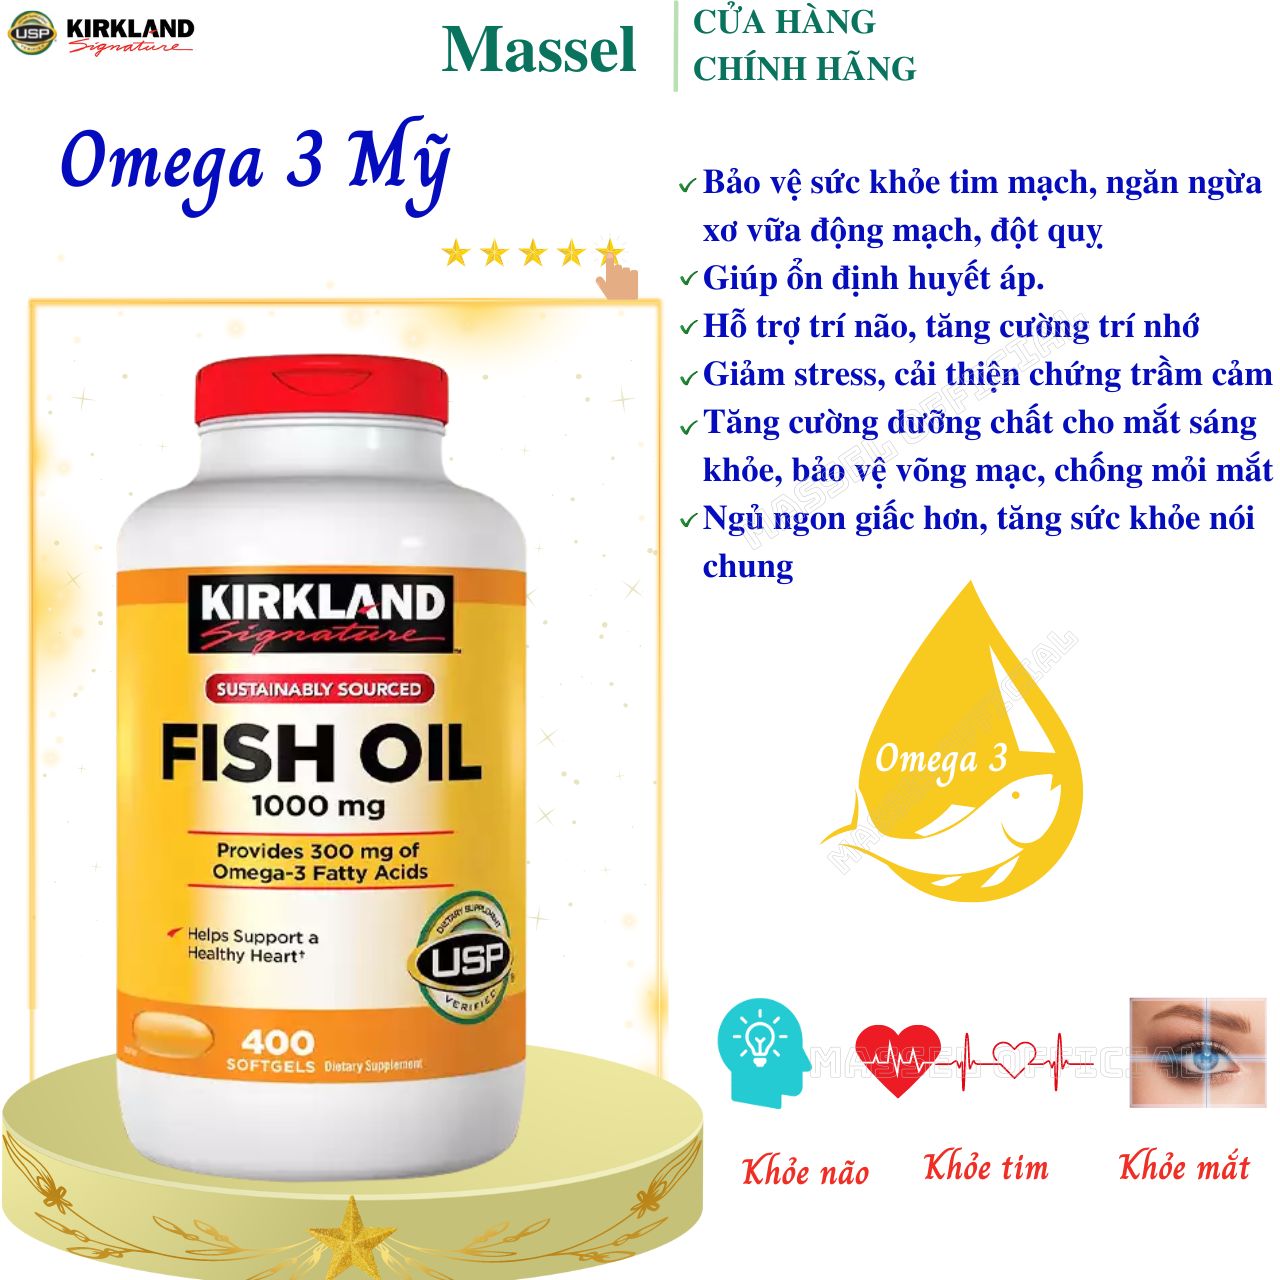 Dầu Cá Omega 3 Kirkland Signature Fish Oil Bổ não, bổ mắt, Hỗ trợ sức khỏe tim mạch, khớp - Massel Official